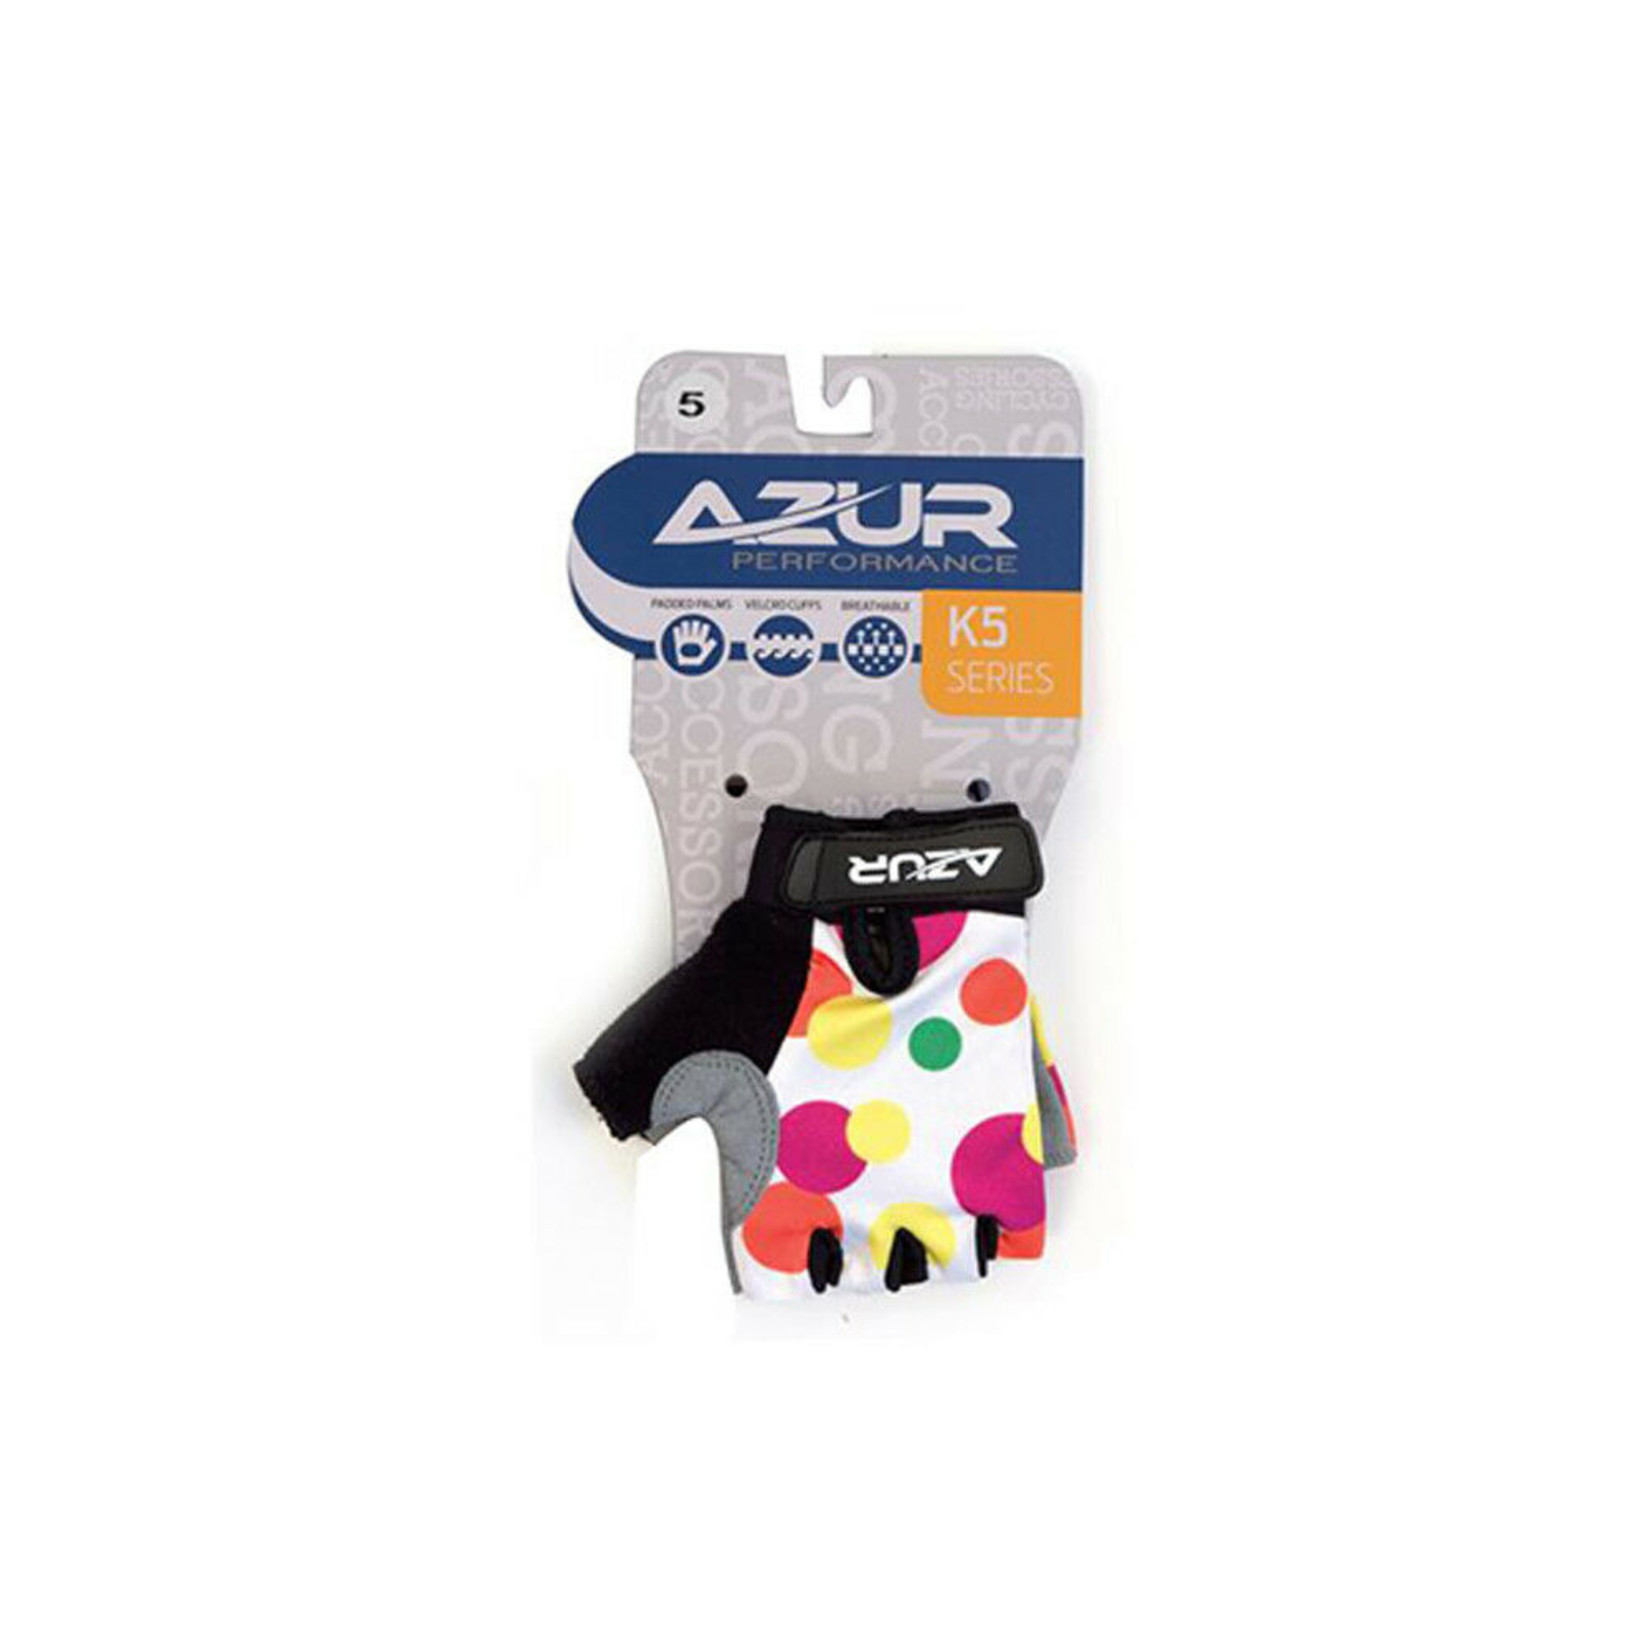 Azur Azur Bike/Cycling Glove - K5 Series Girls - Spots - Size 5